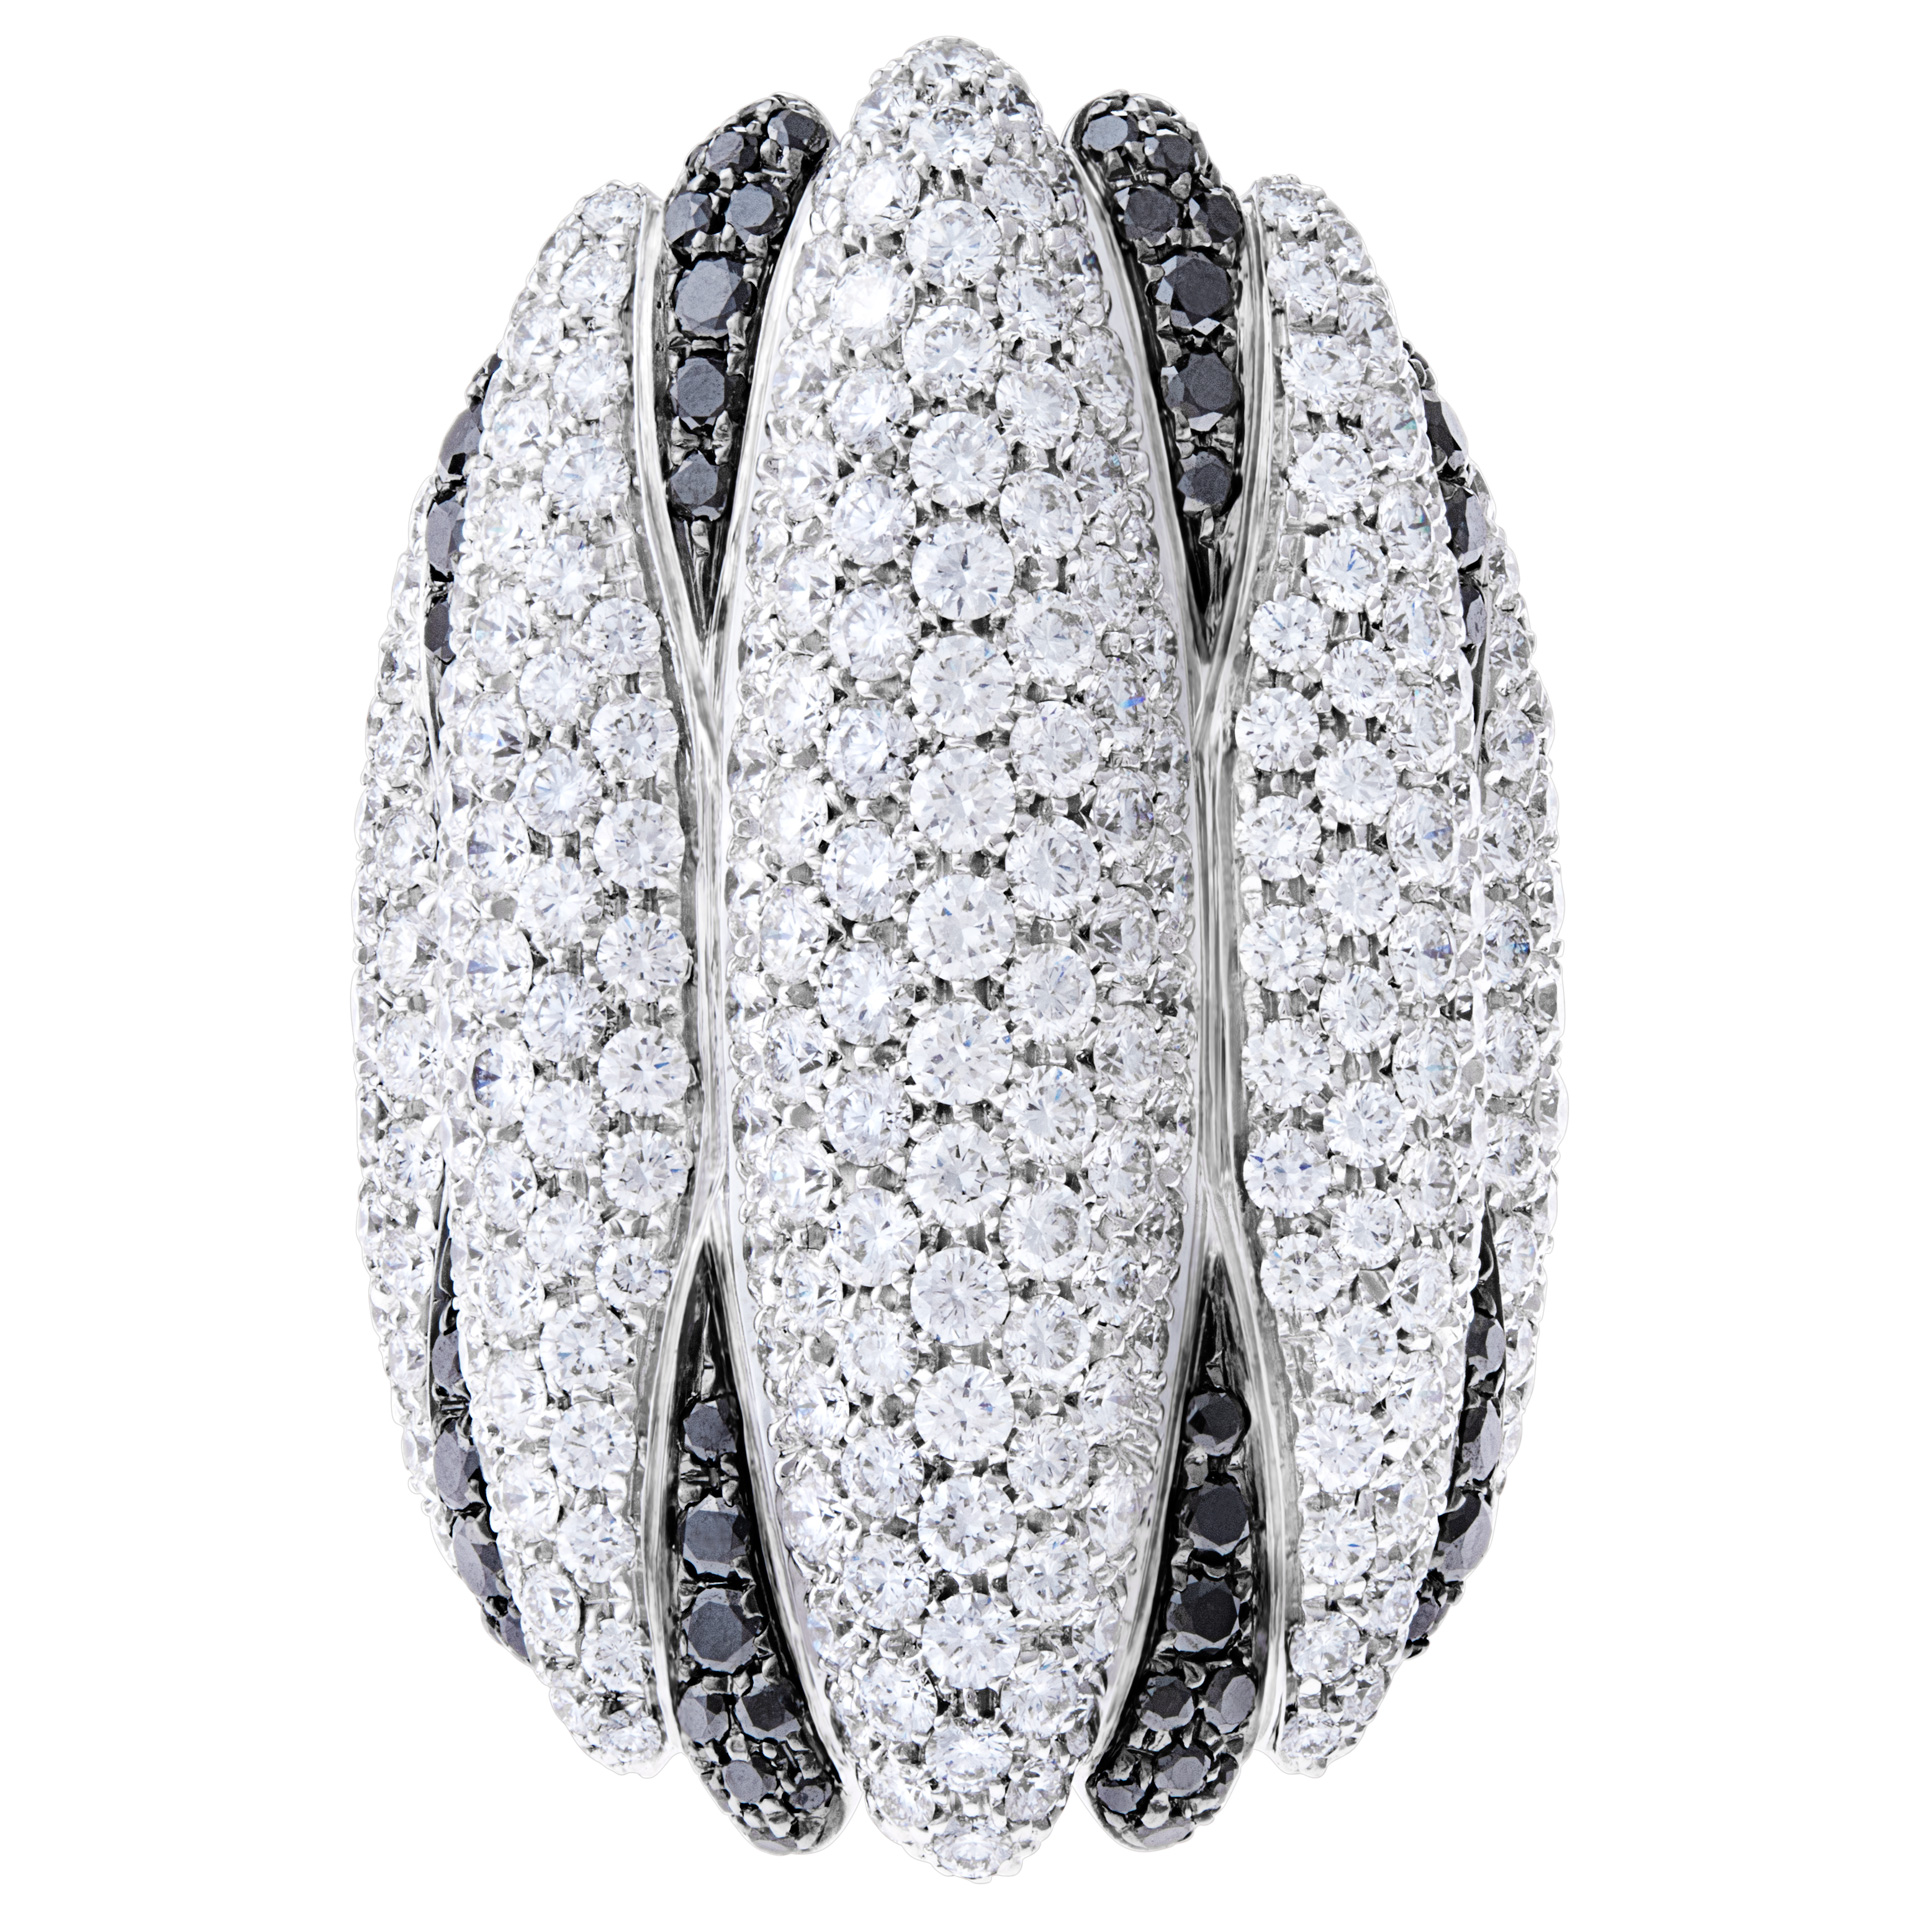 Stylish 18k white gold black and white diamond designer ring by Palmiero J.D. image 1